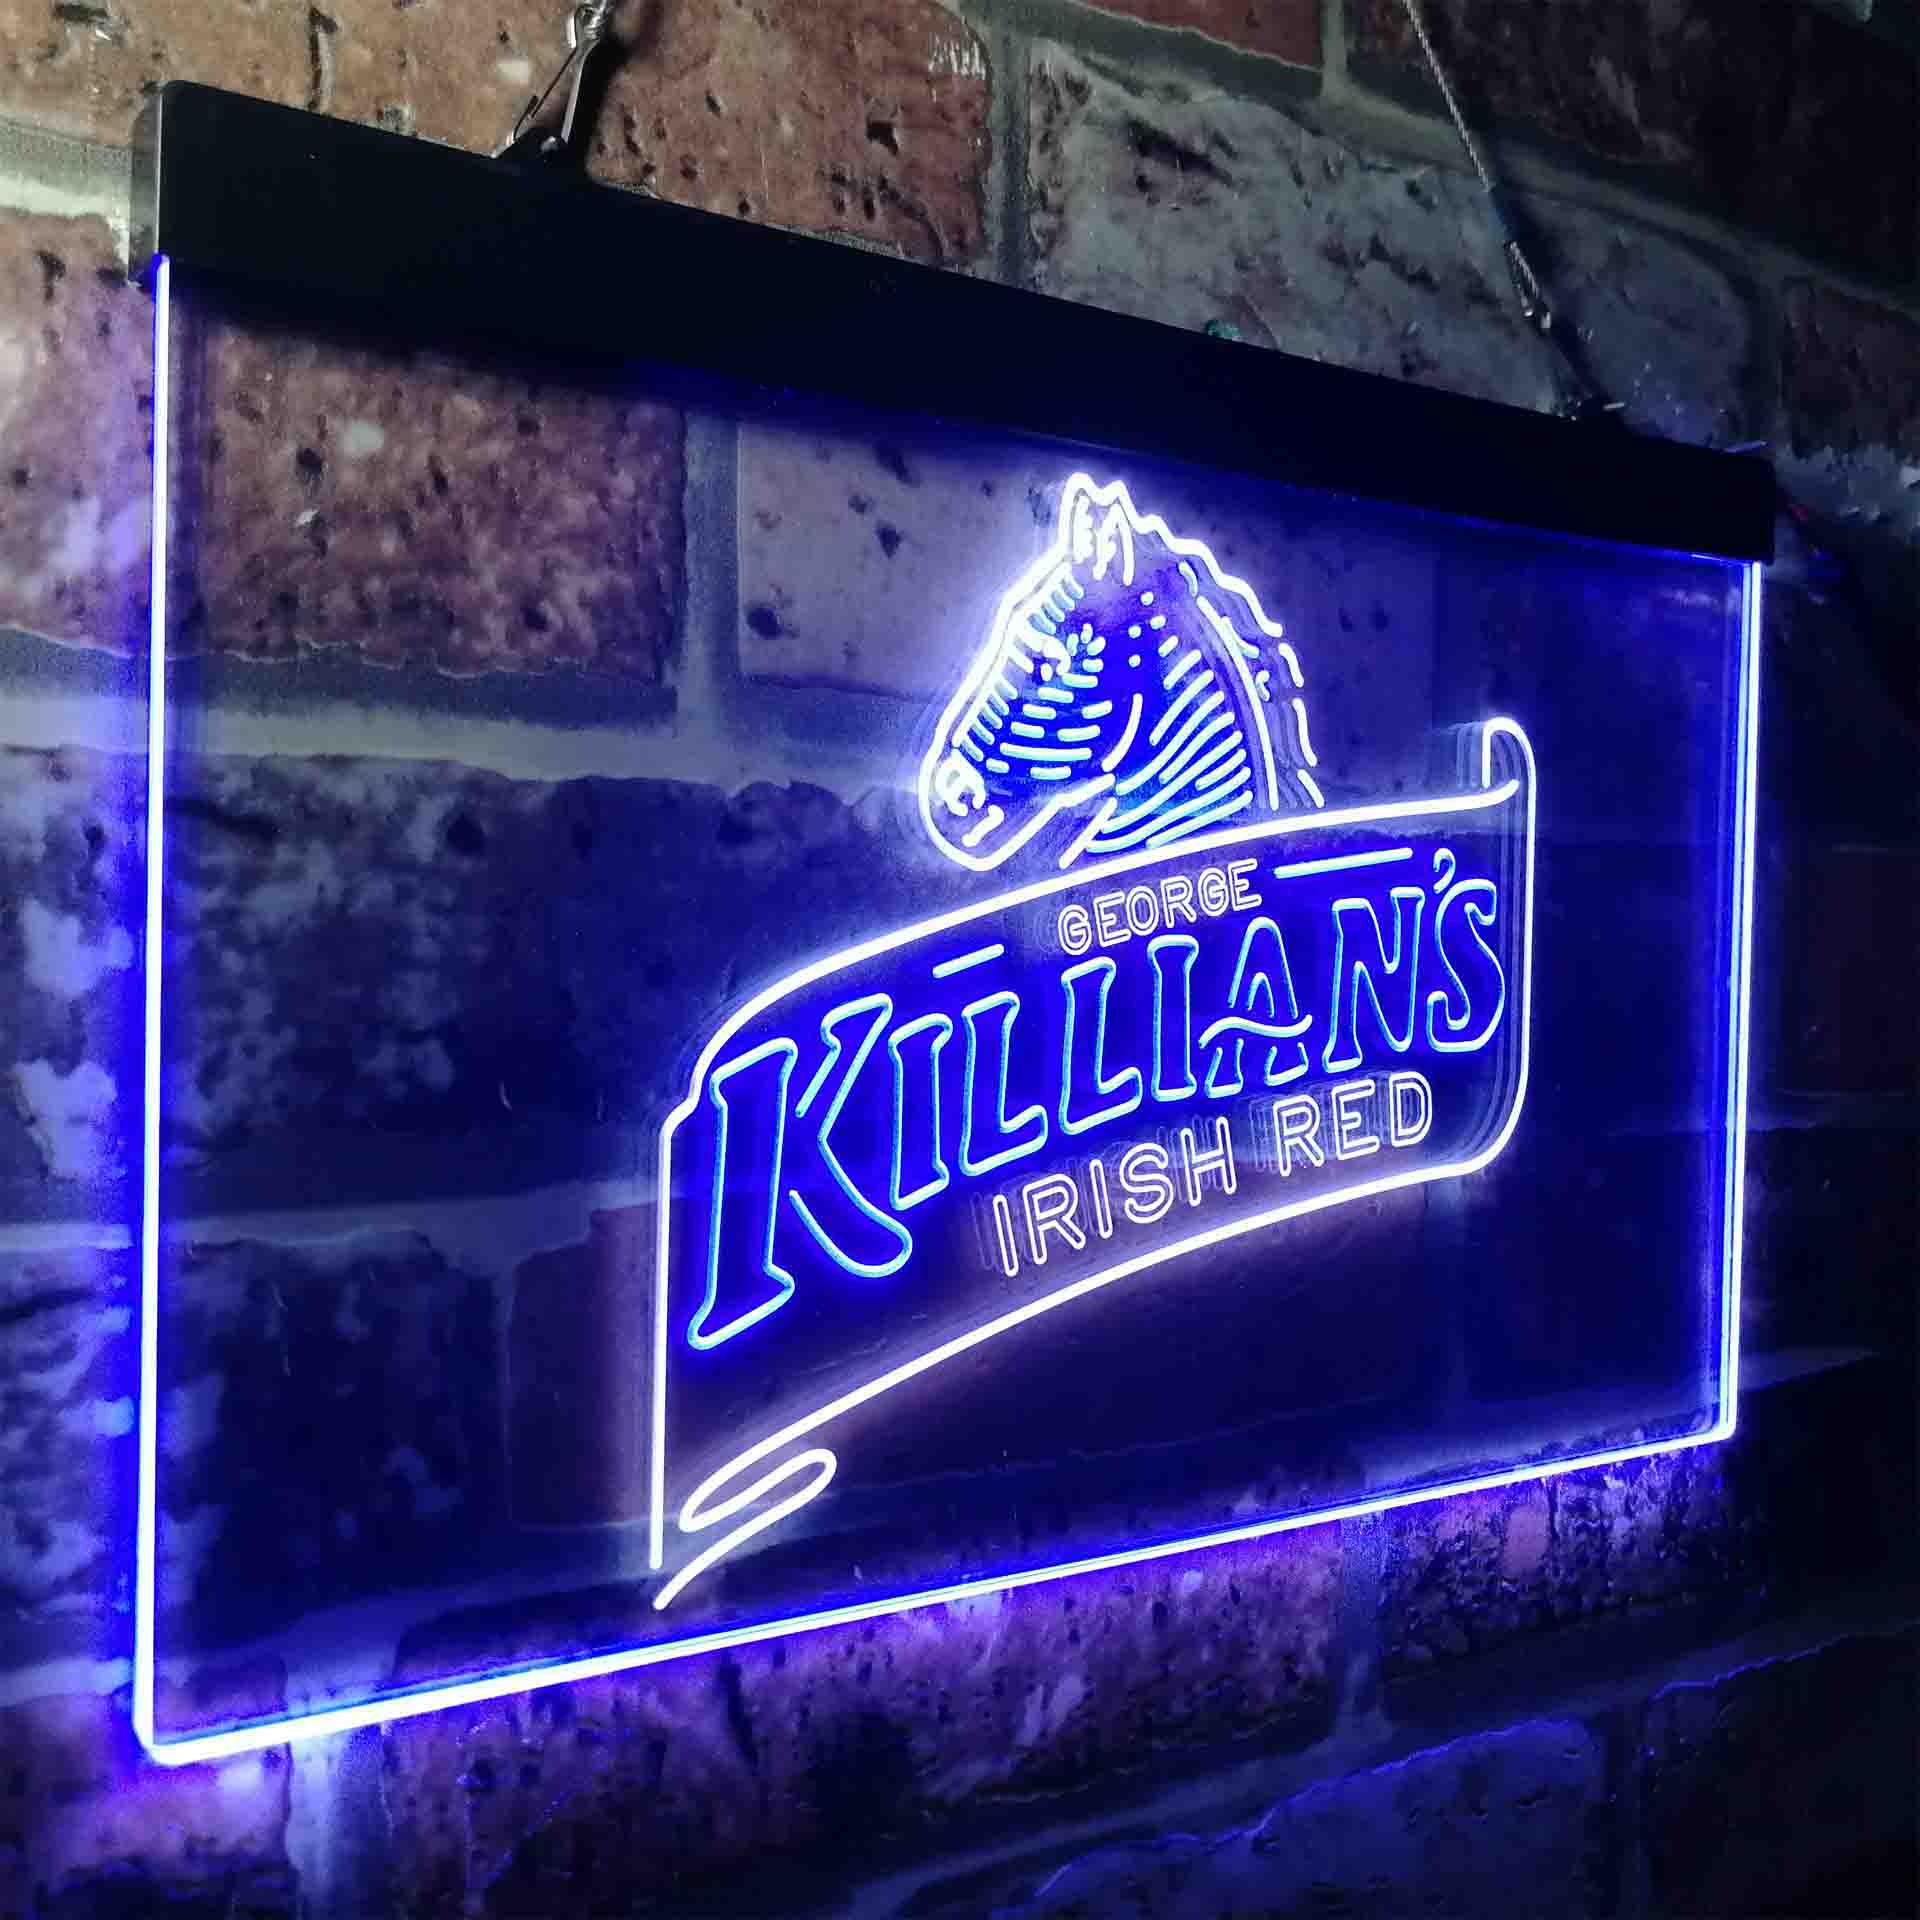 Killian's Beer Irish Red Horse Head Neon-Like LED Sign